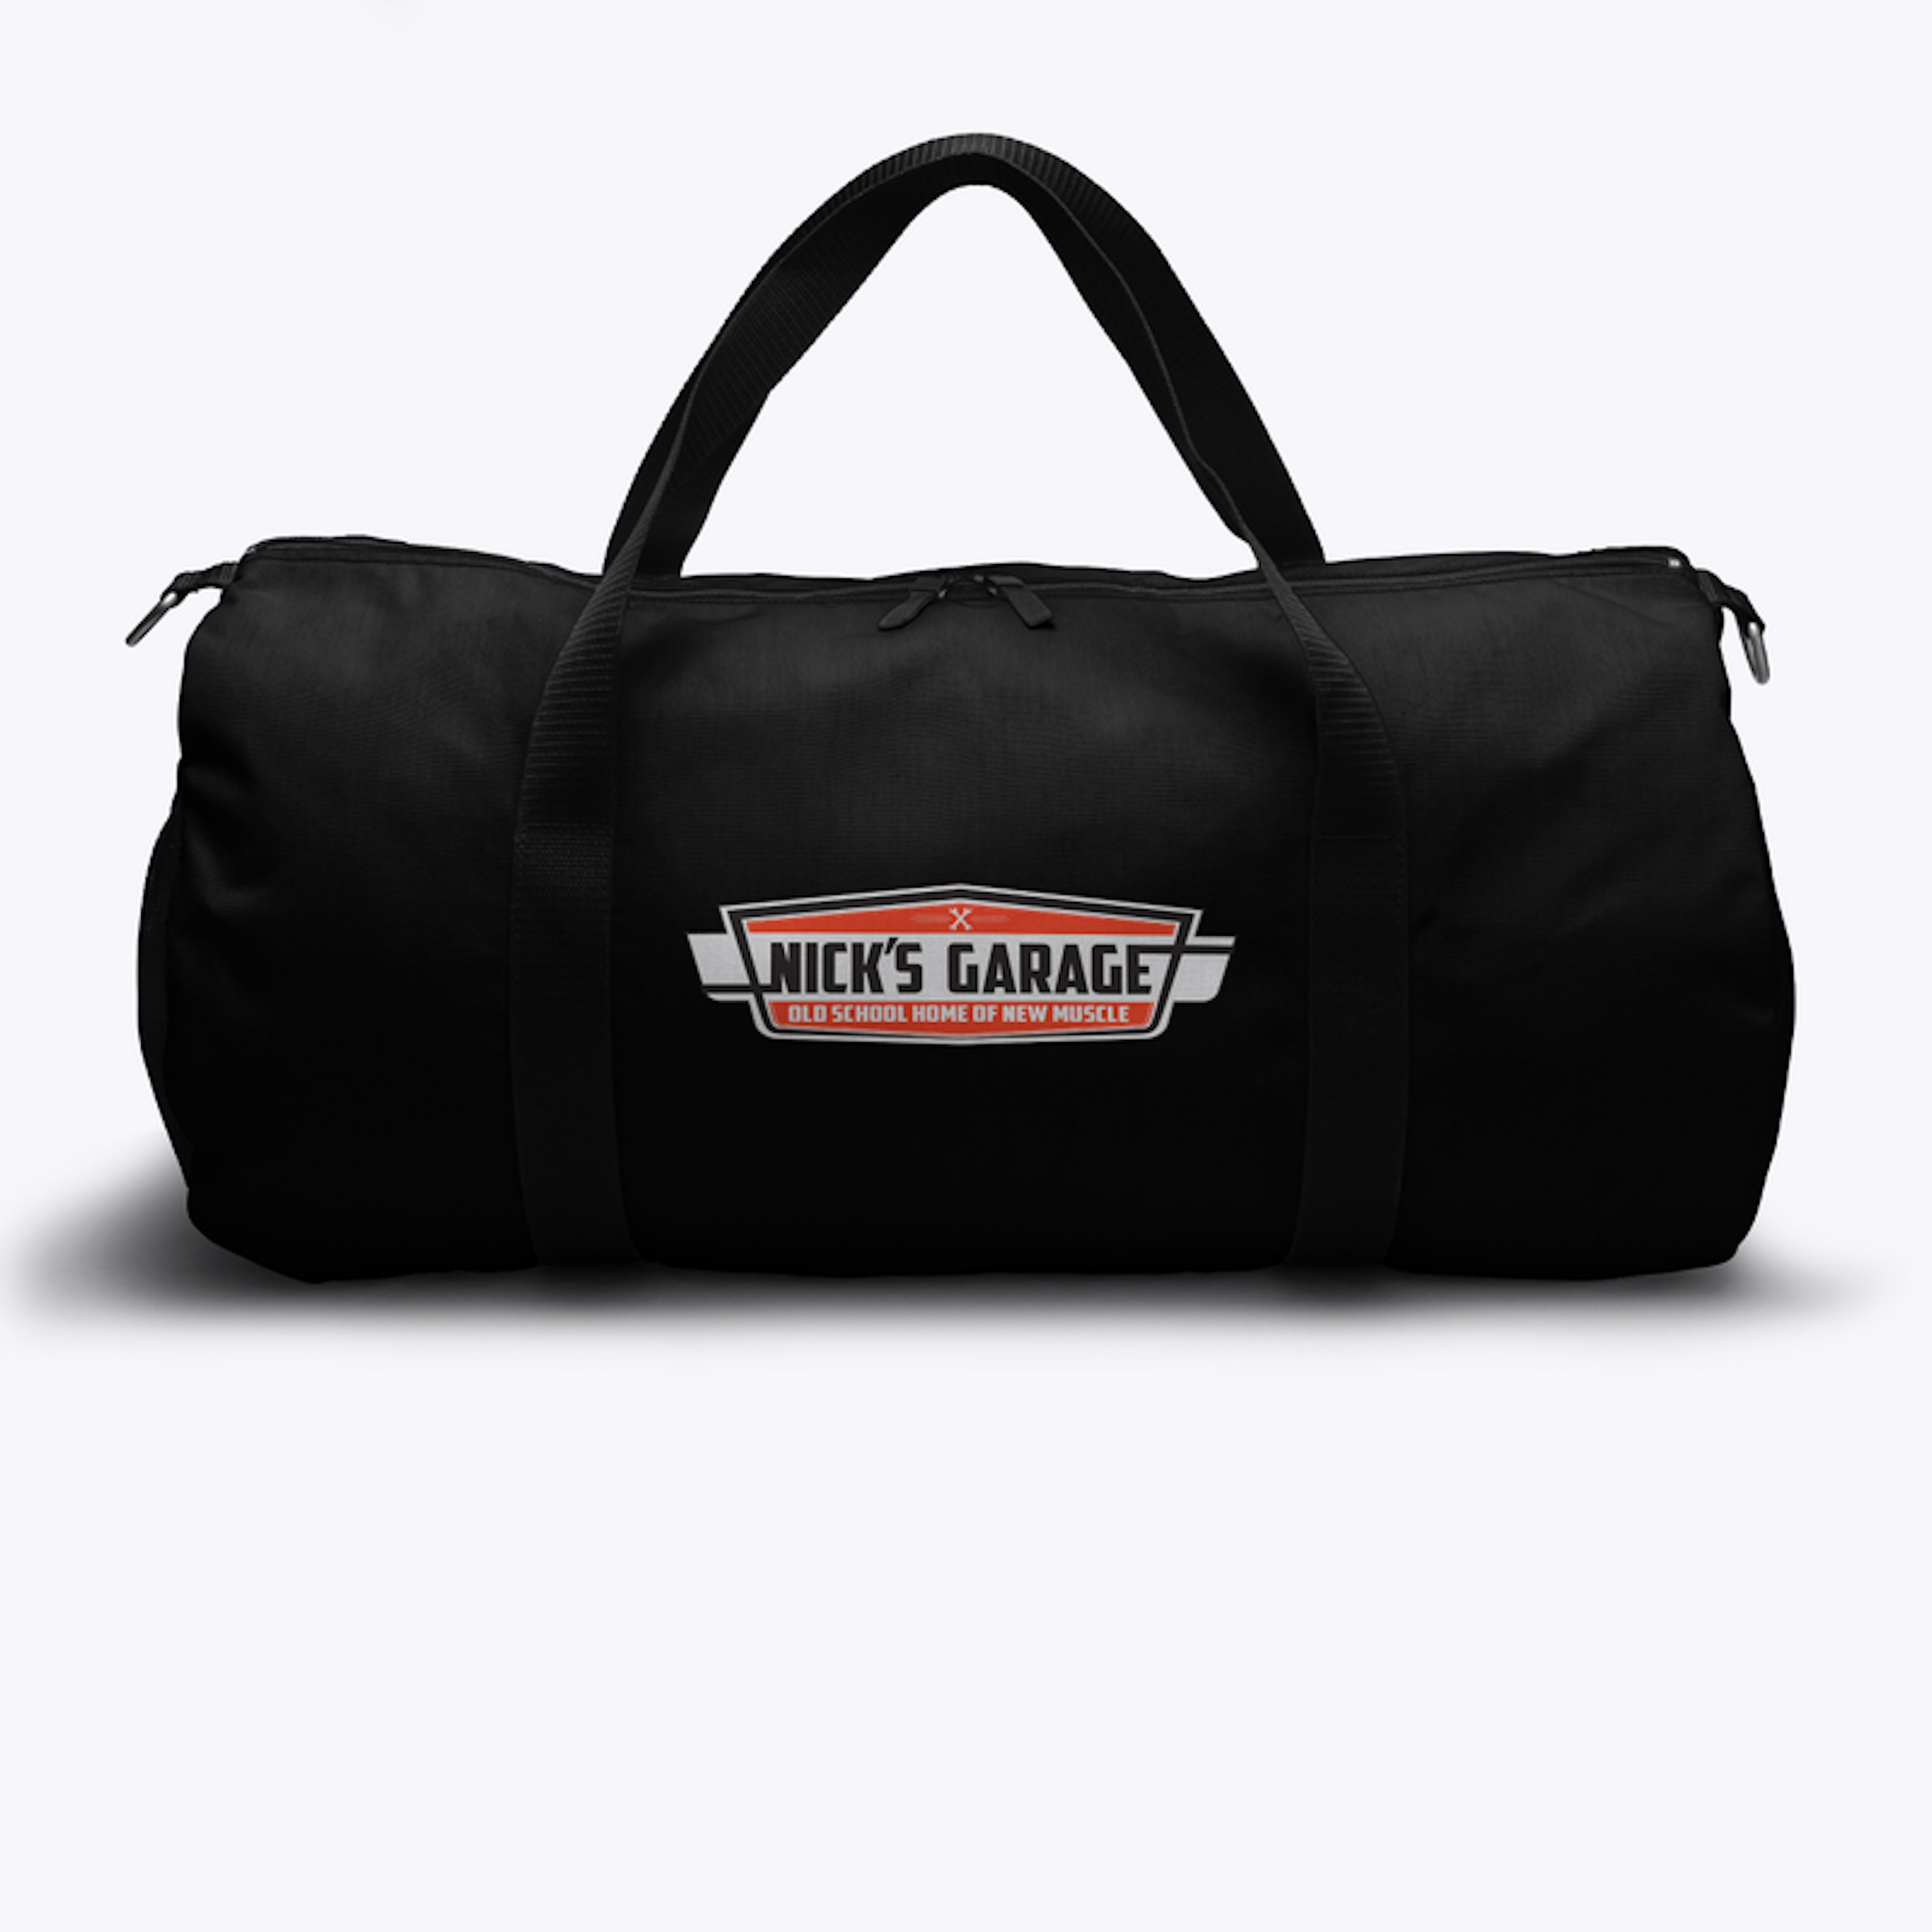 Nick's Garage Black Duffle Bag